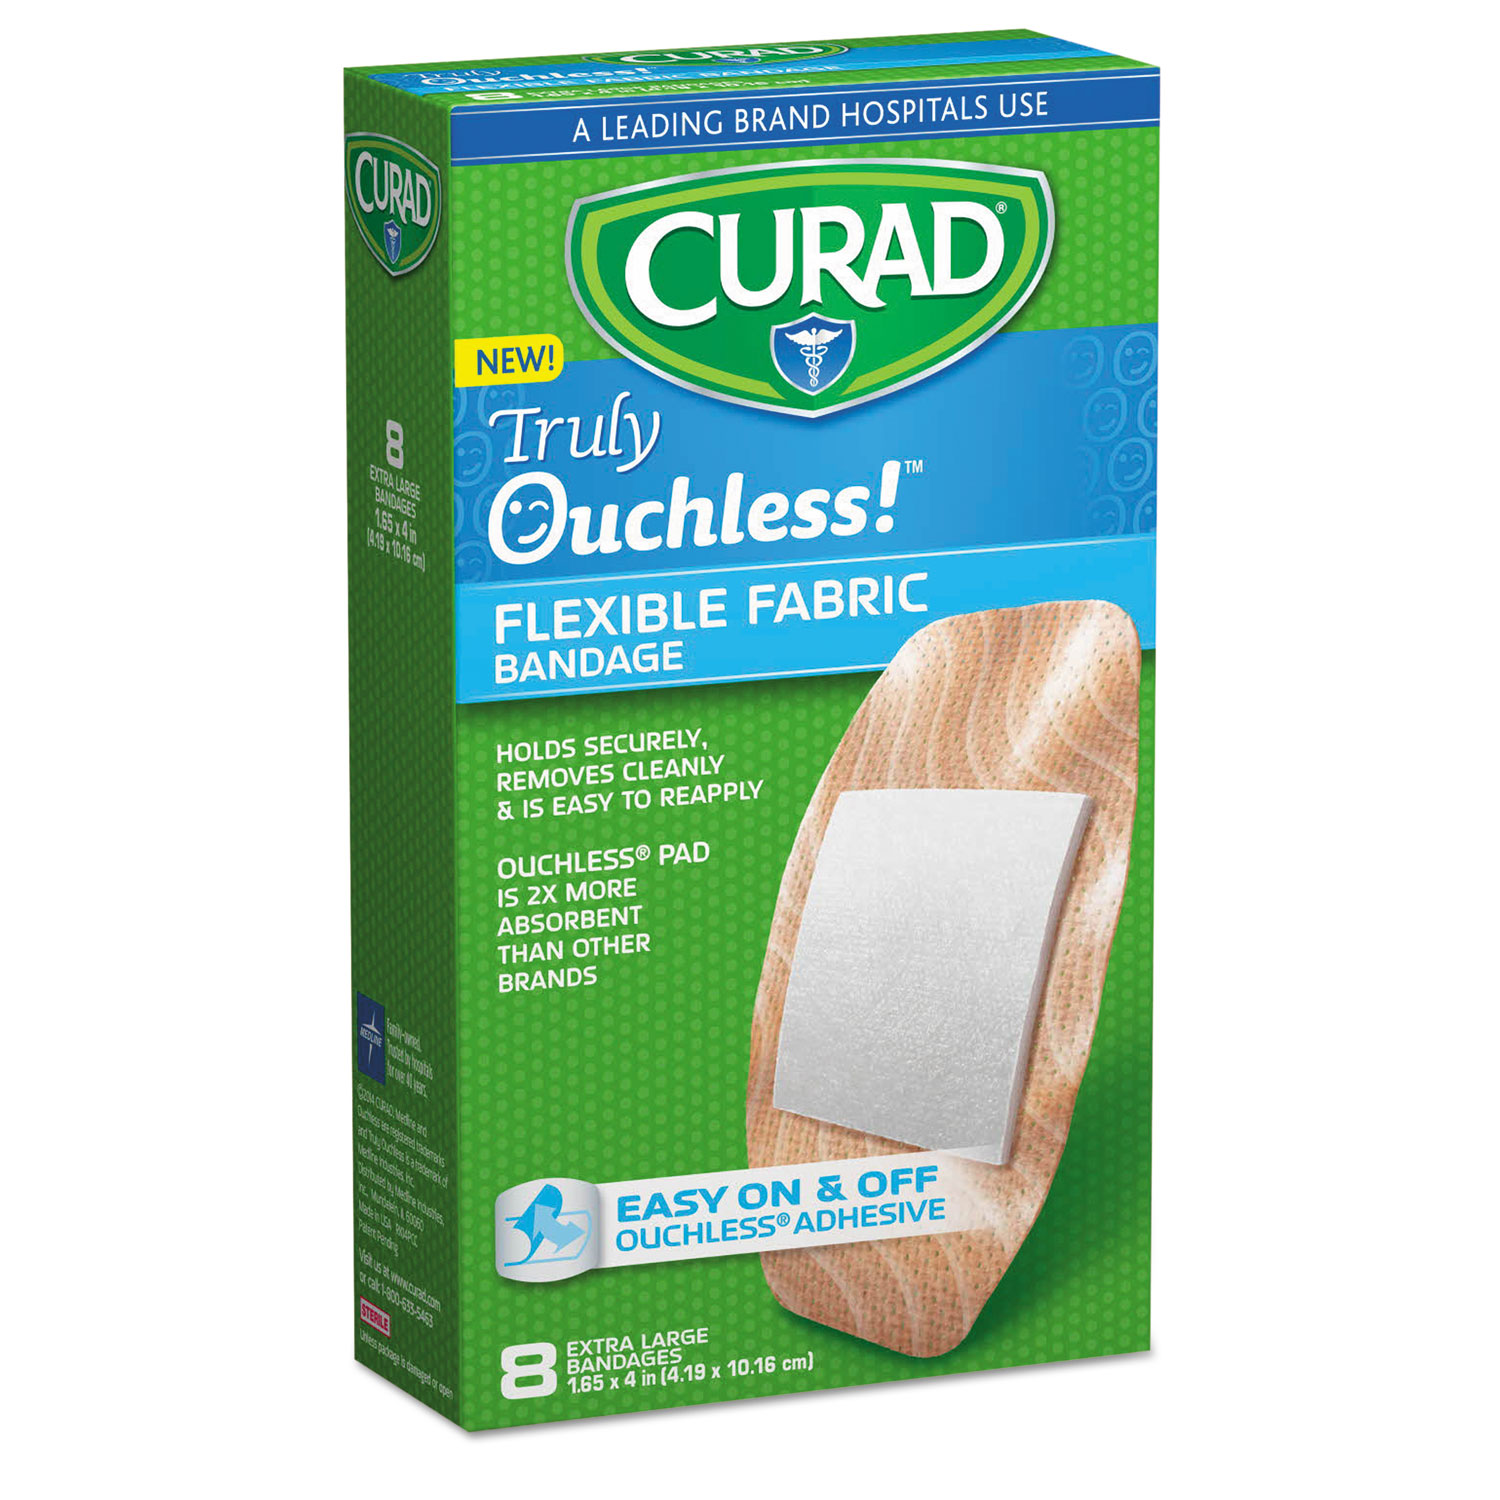  Curad CUR5003 Ouchless Flex Fabric Bandages, 1.65 x 4, 8/Box (MIICUR5003V1) 